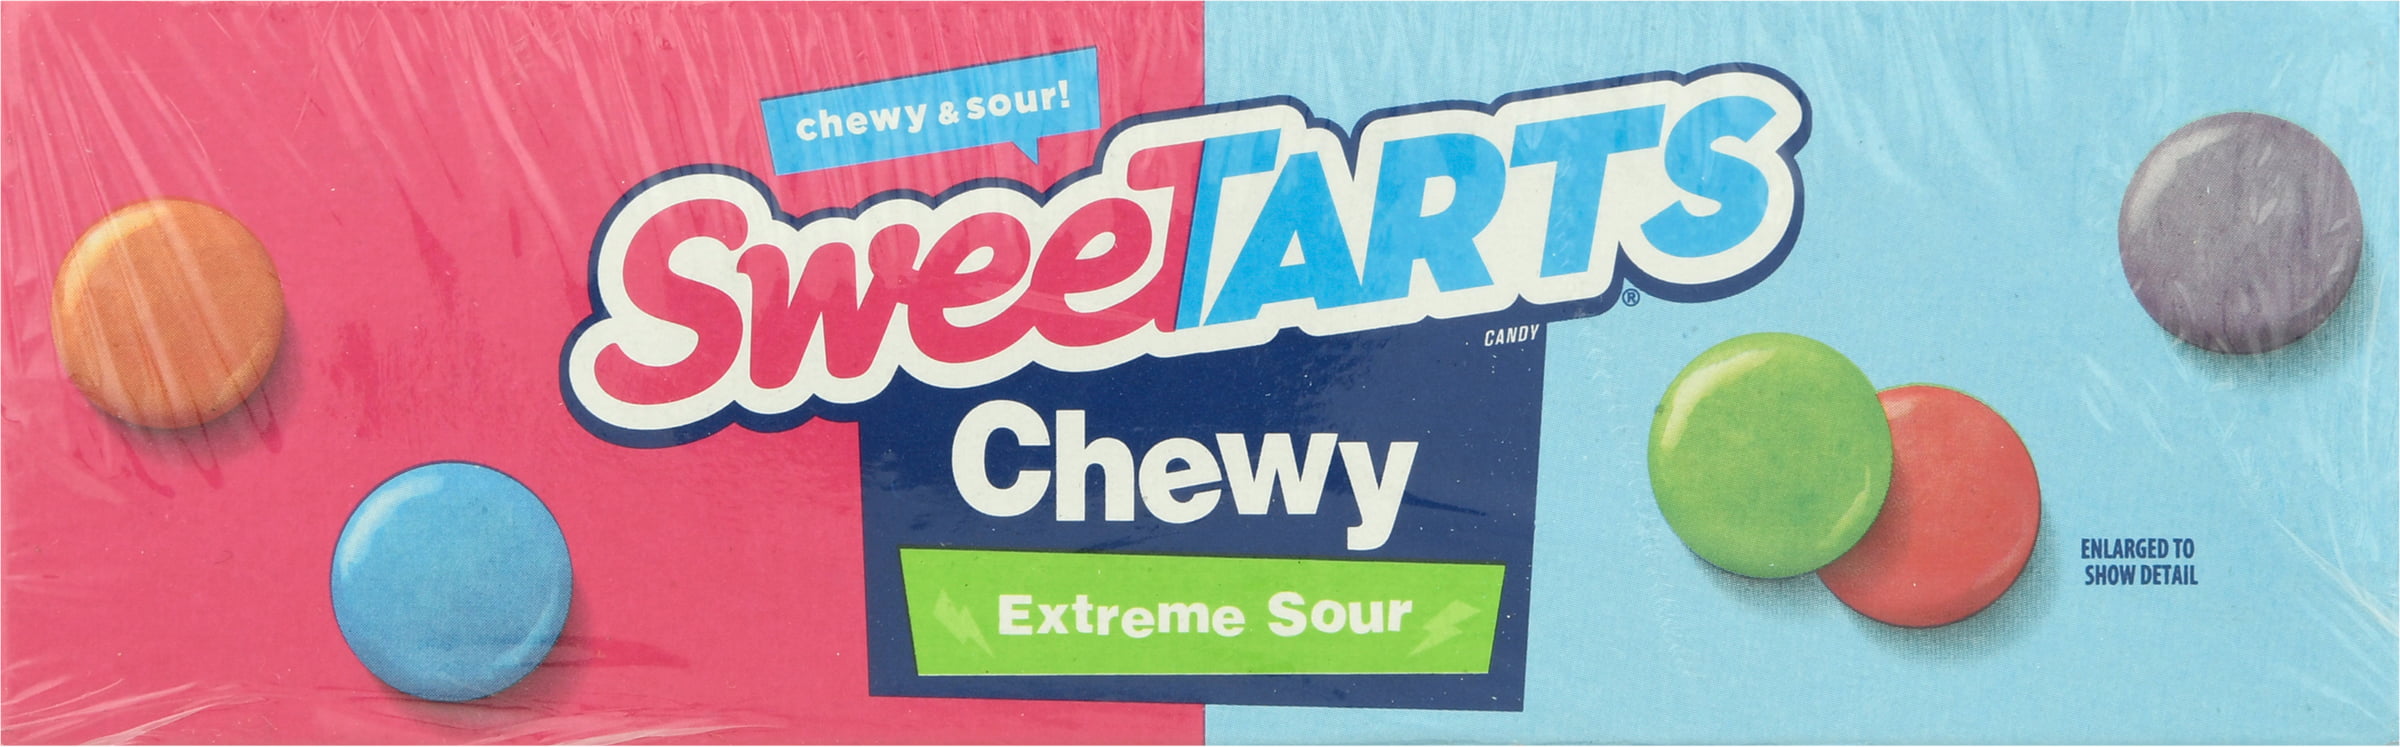 SweeTarts Wonka Candy, Chewy Shockers, 1.65 oz (46.7 g)